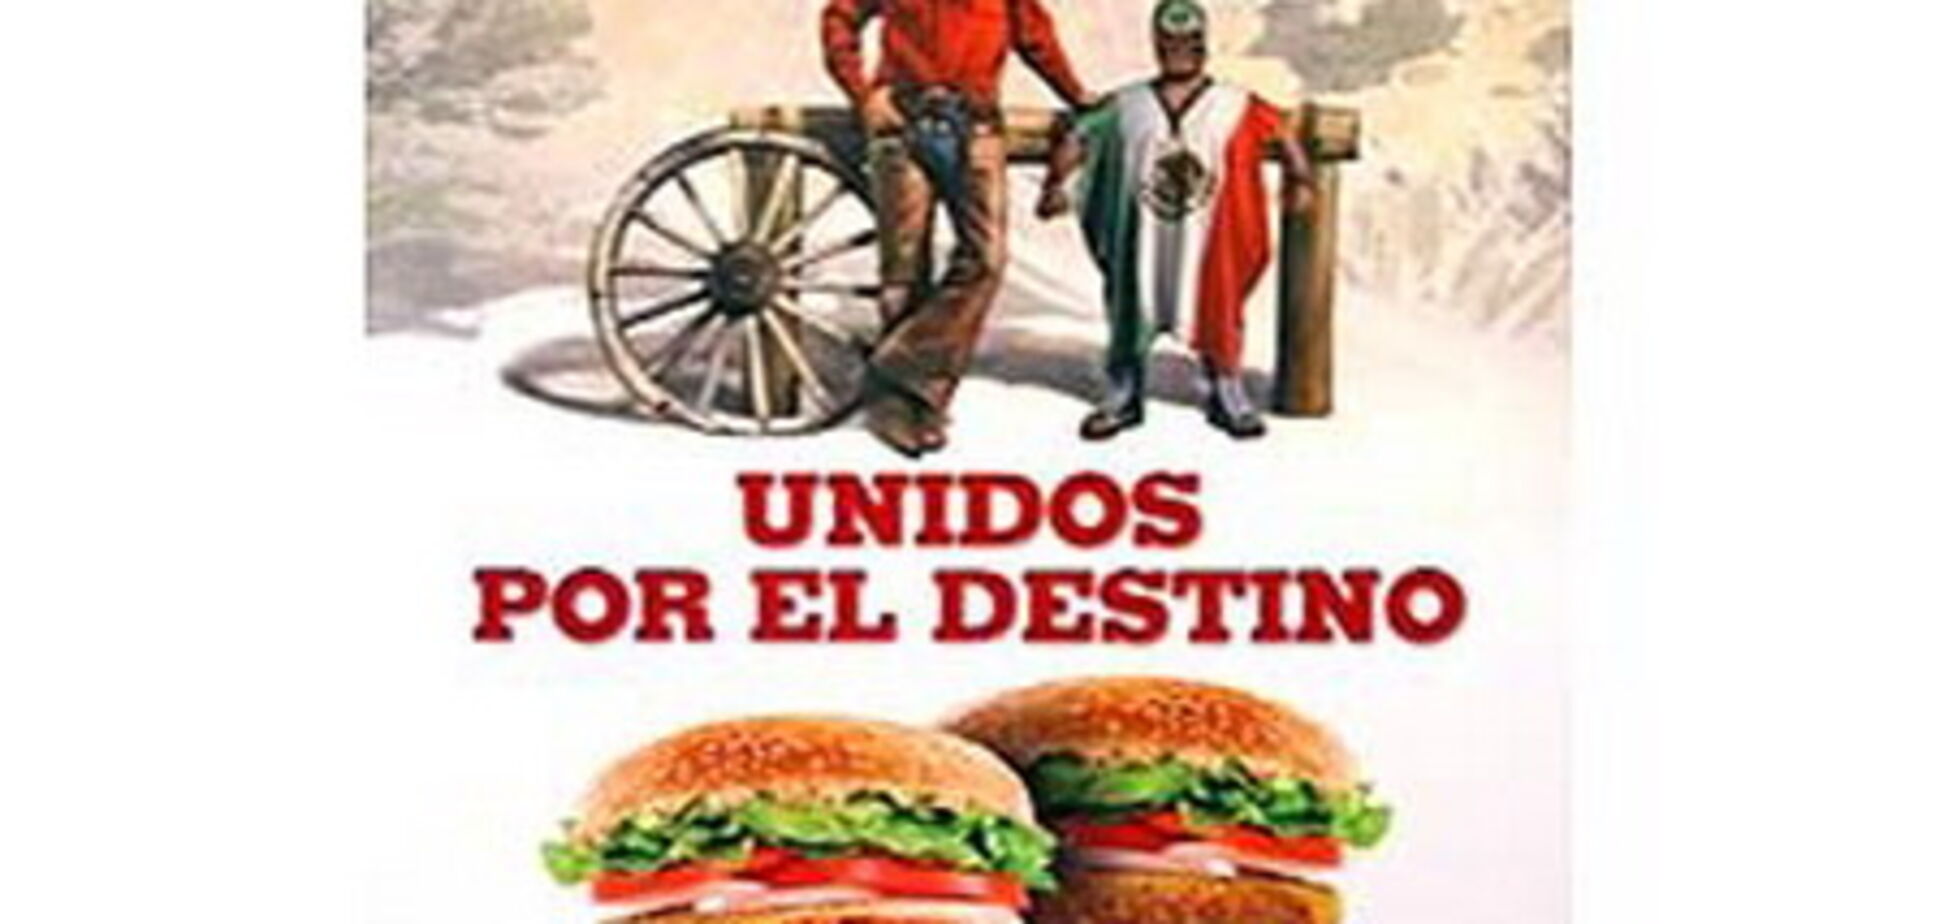 Реклама чизбургера обидела мексиканского посла